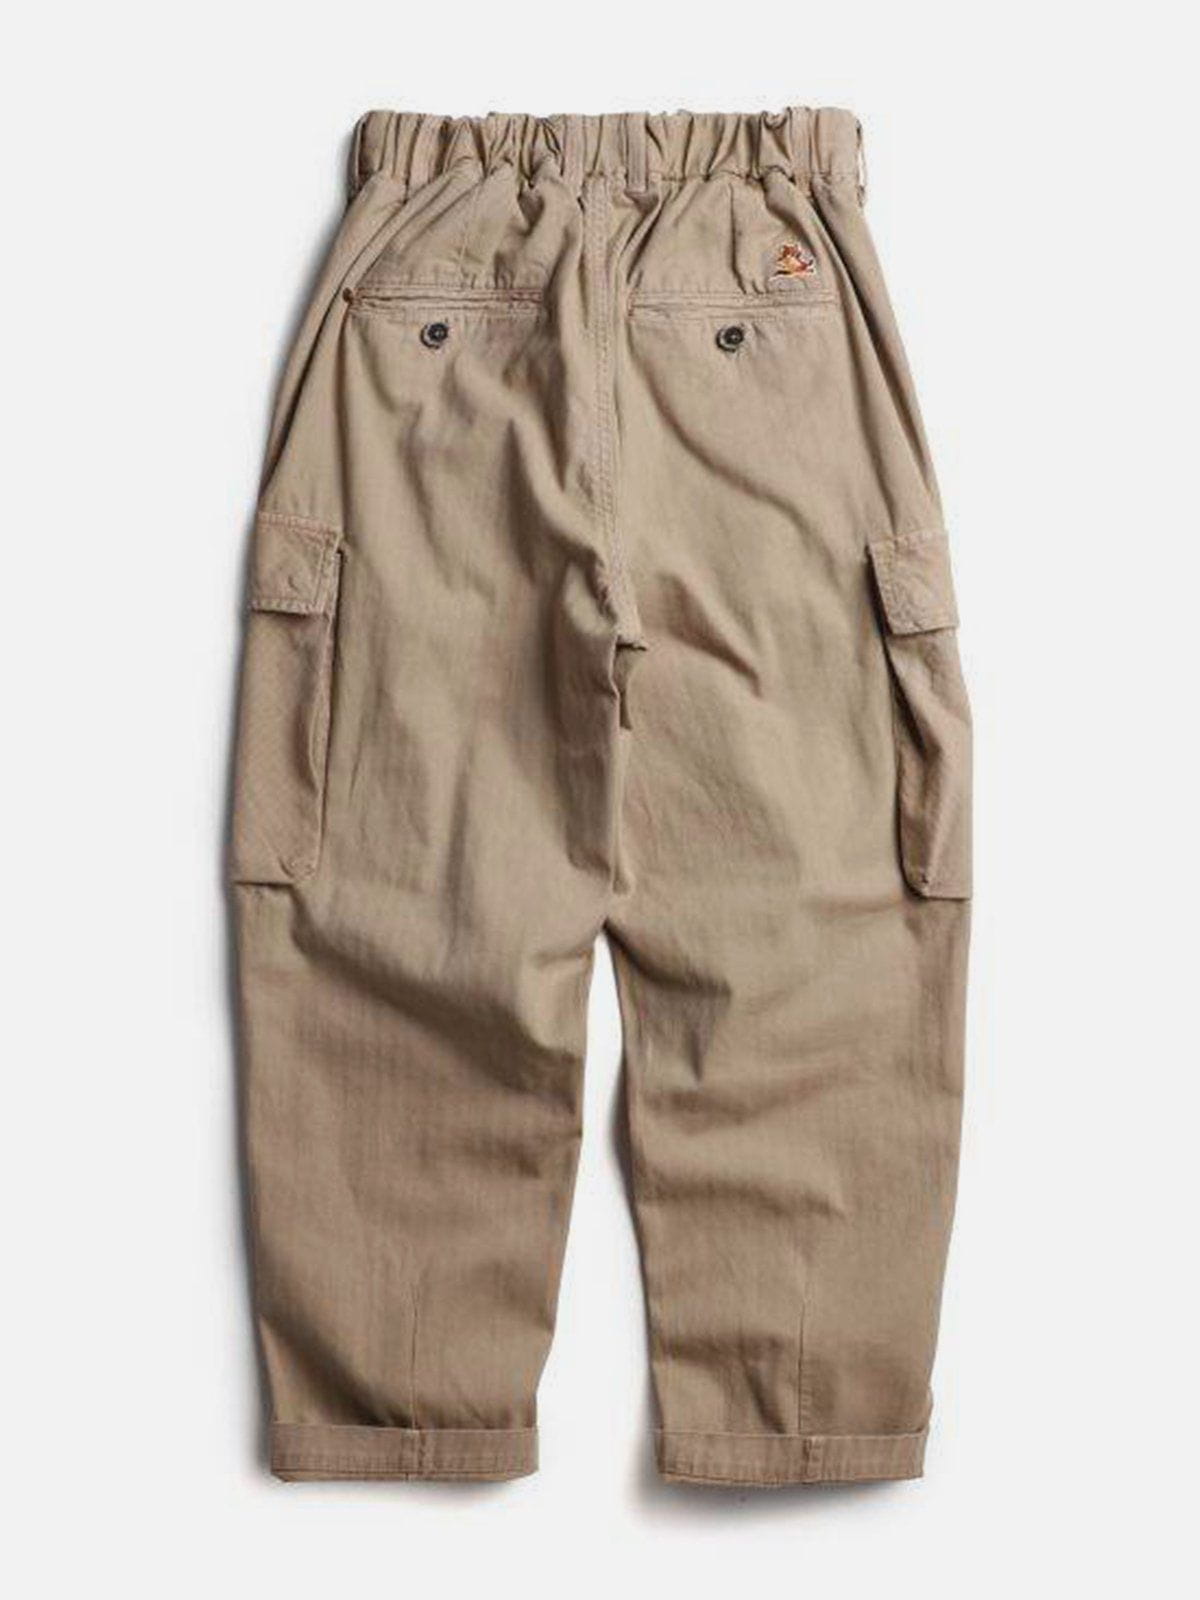 Sneakerland® - Multi-Pocket Cargo Pants